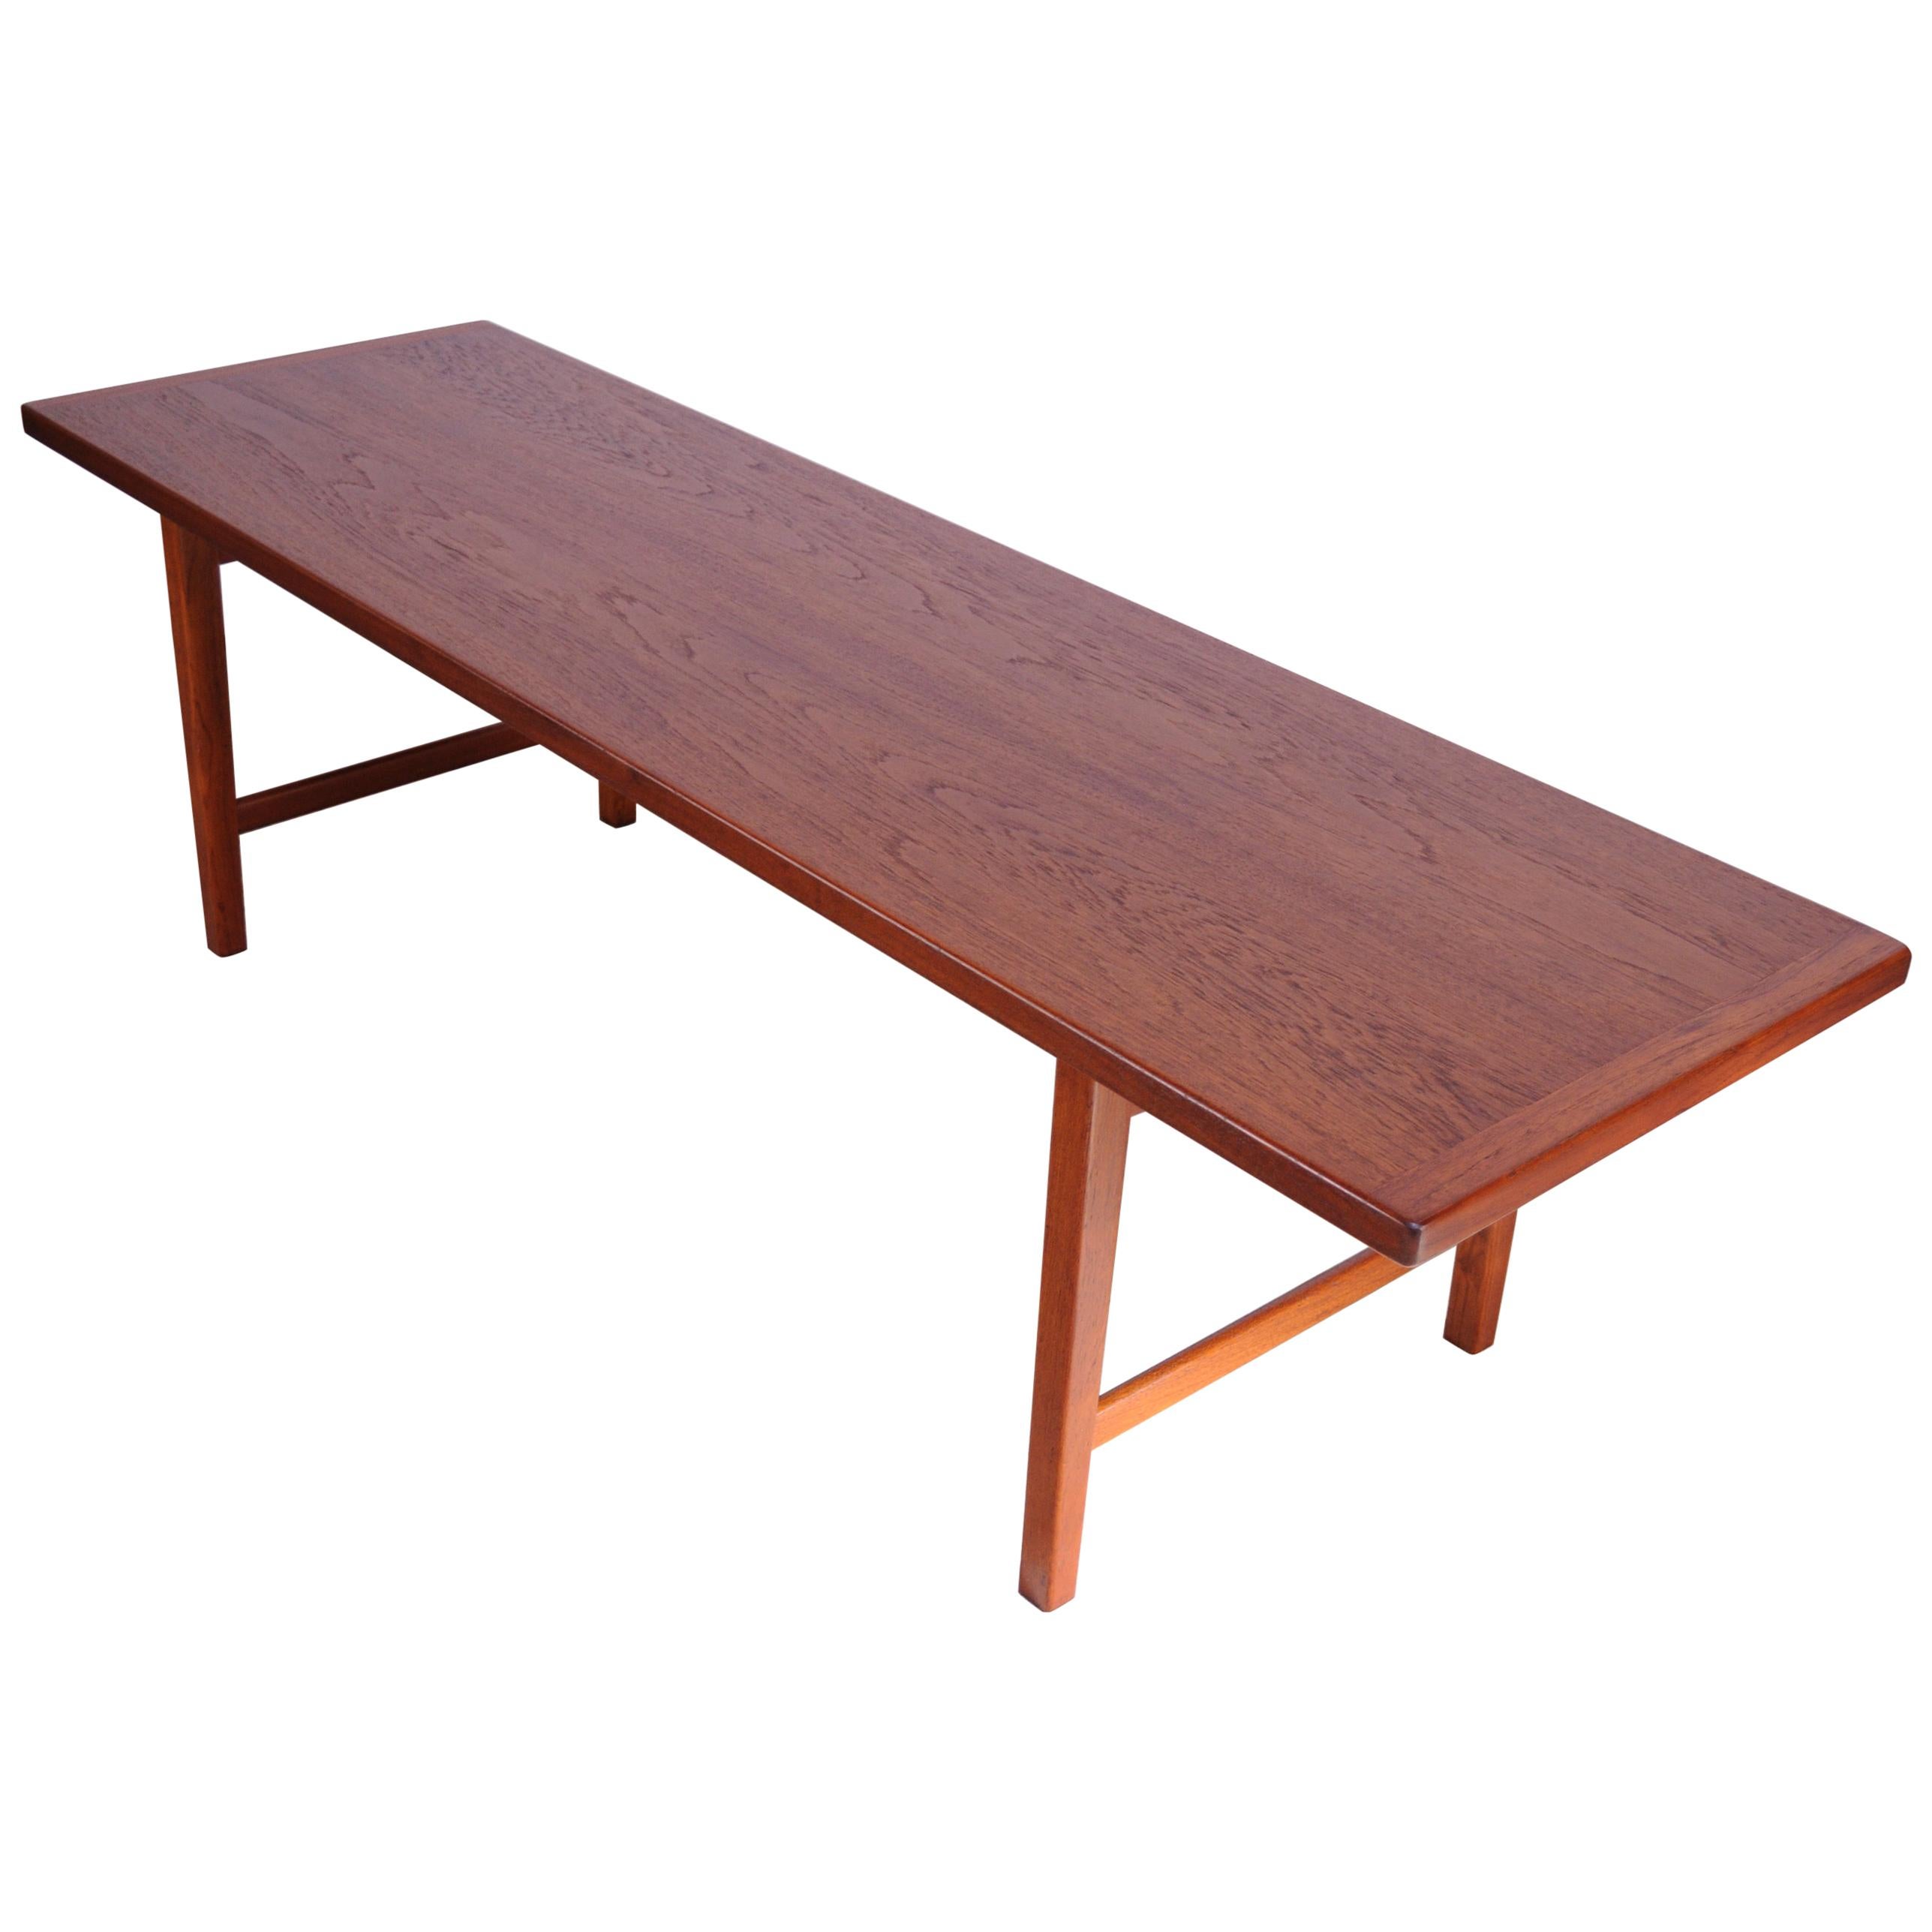 Large Danish Modern Teak Coffee Table / Bench